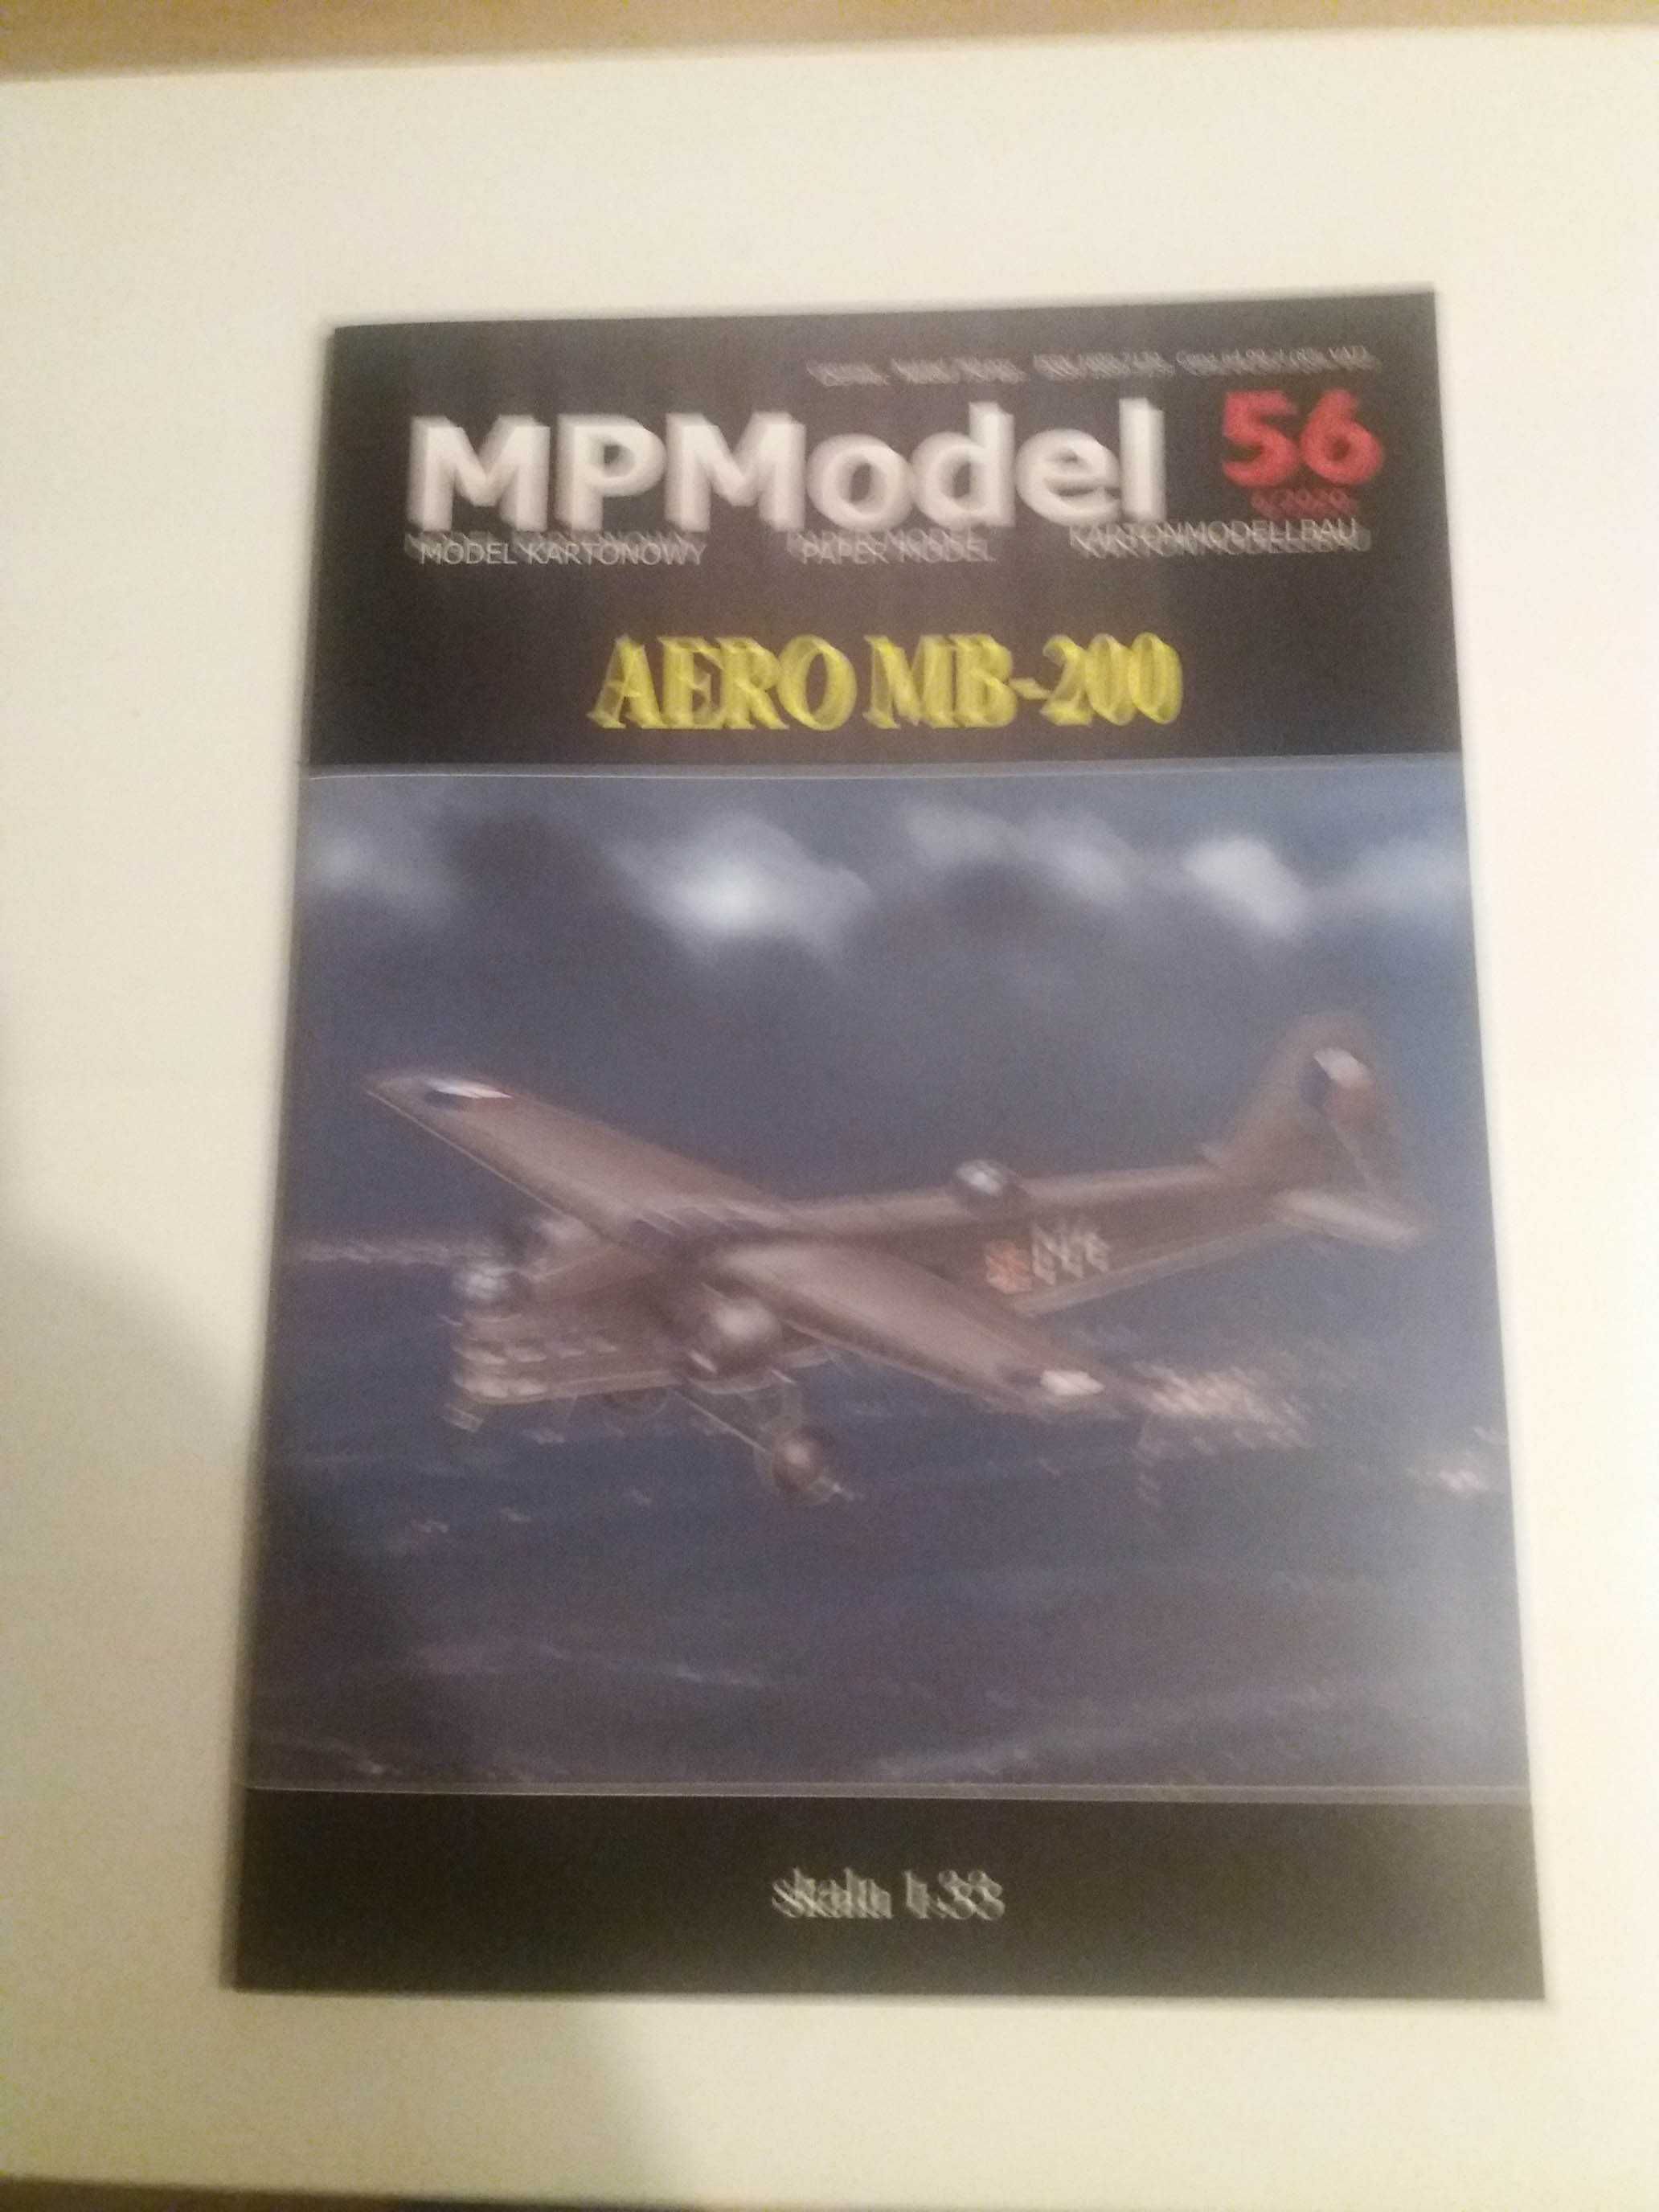 Model kartonowy MPModel Aero MB-200